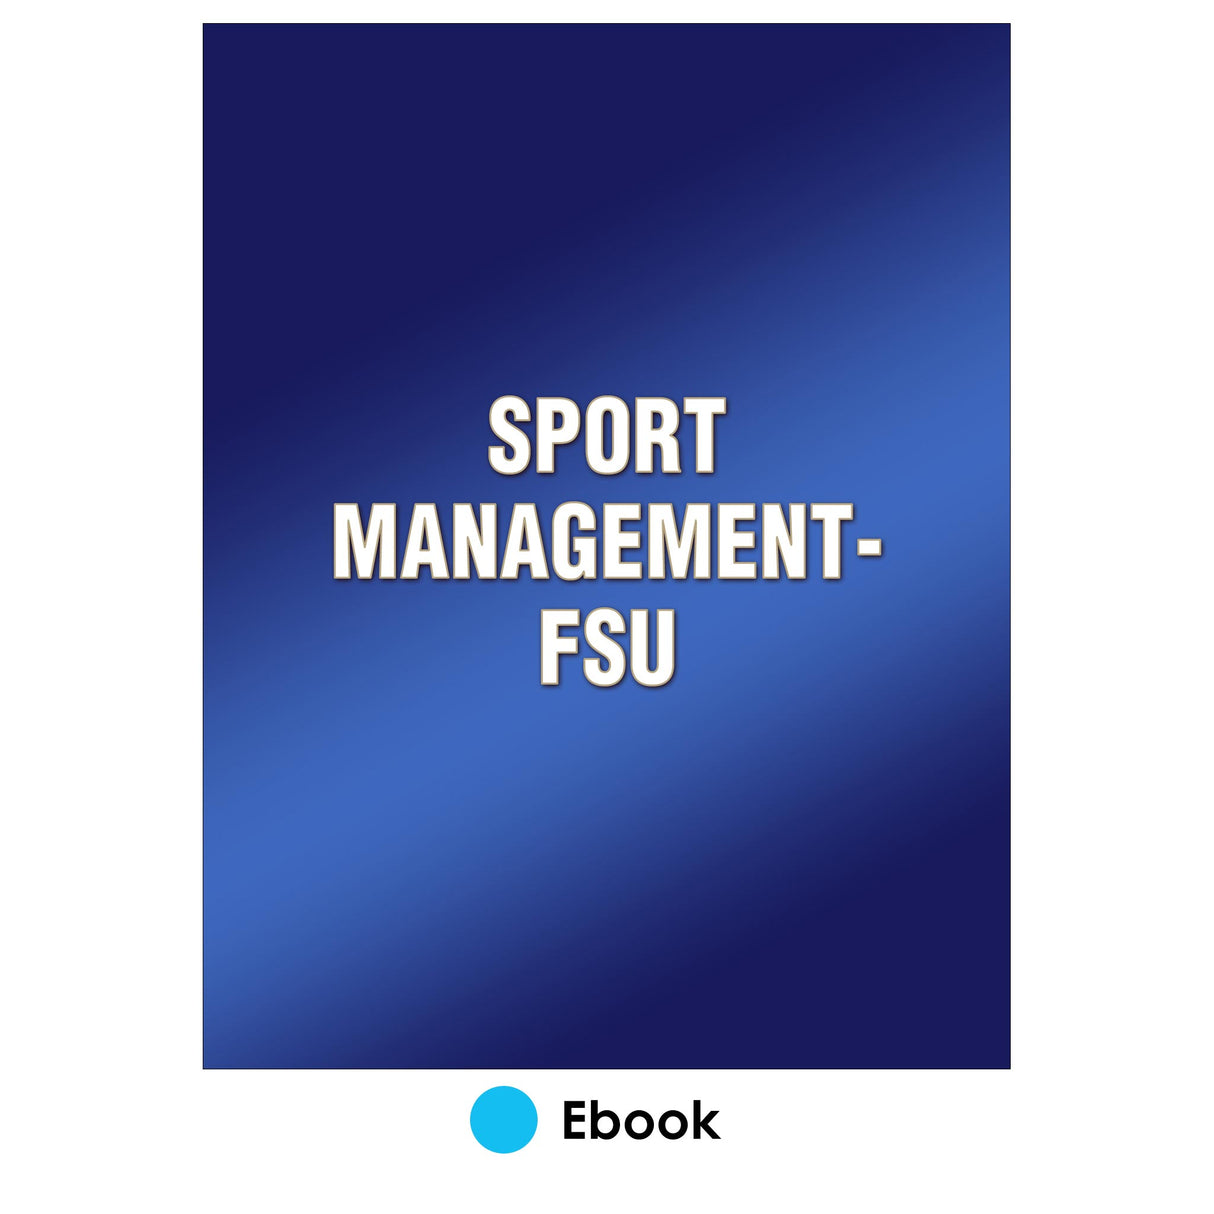 Sport Management-FSU